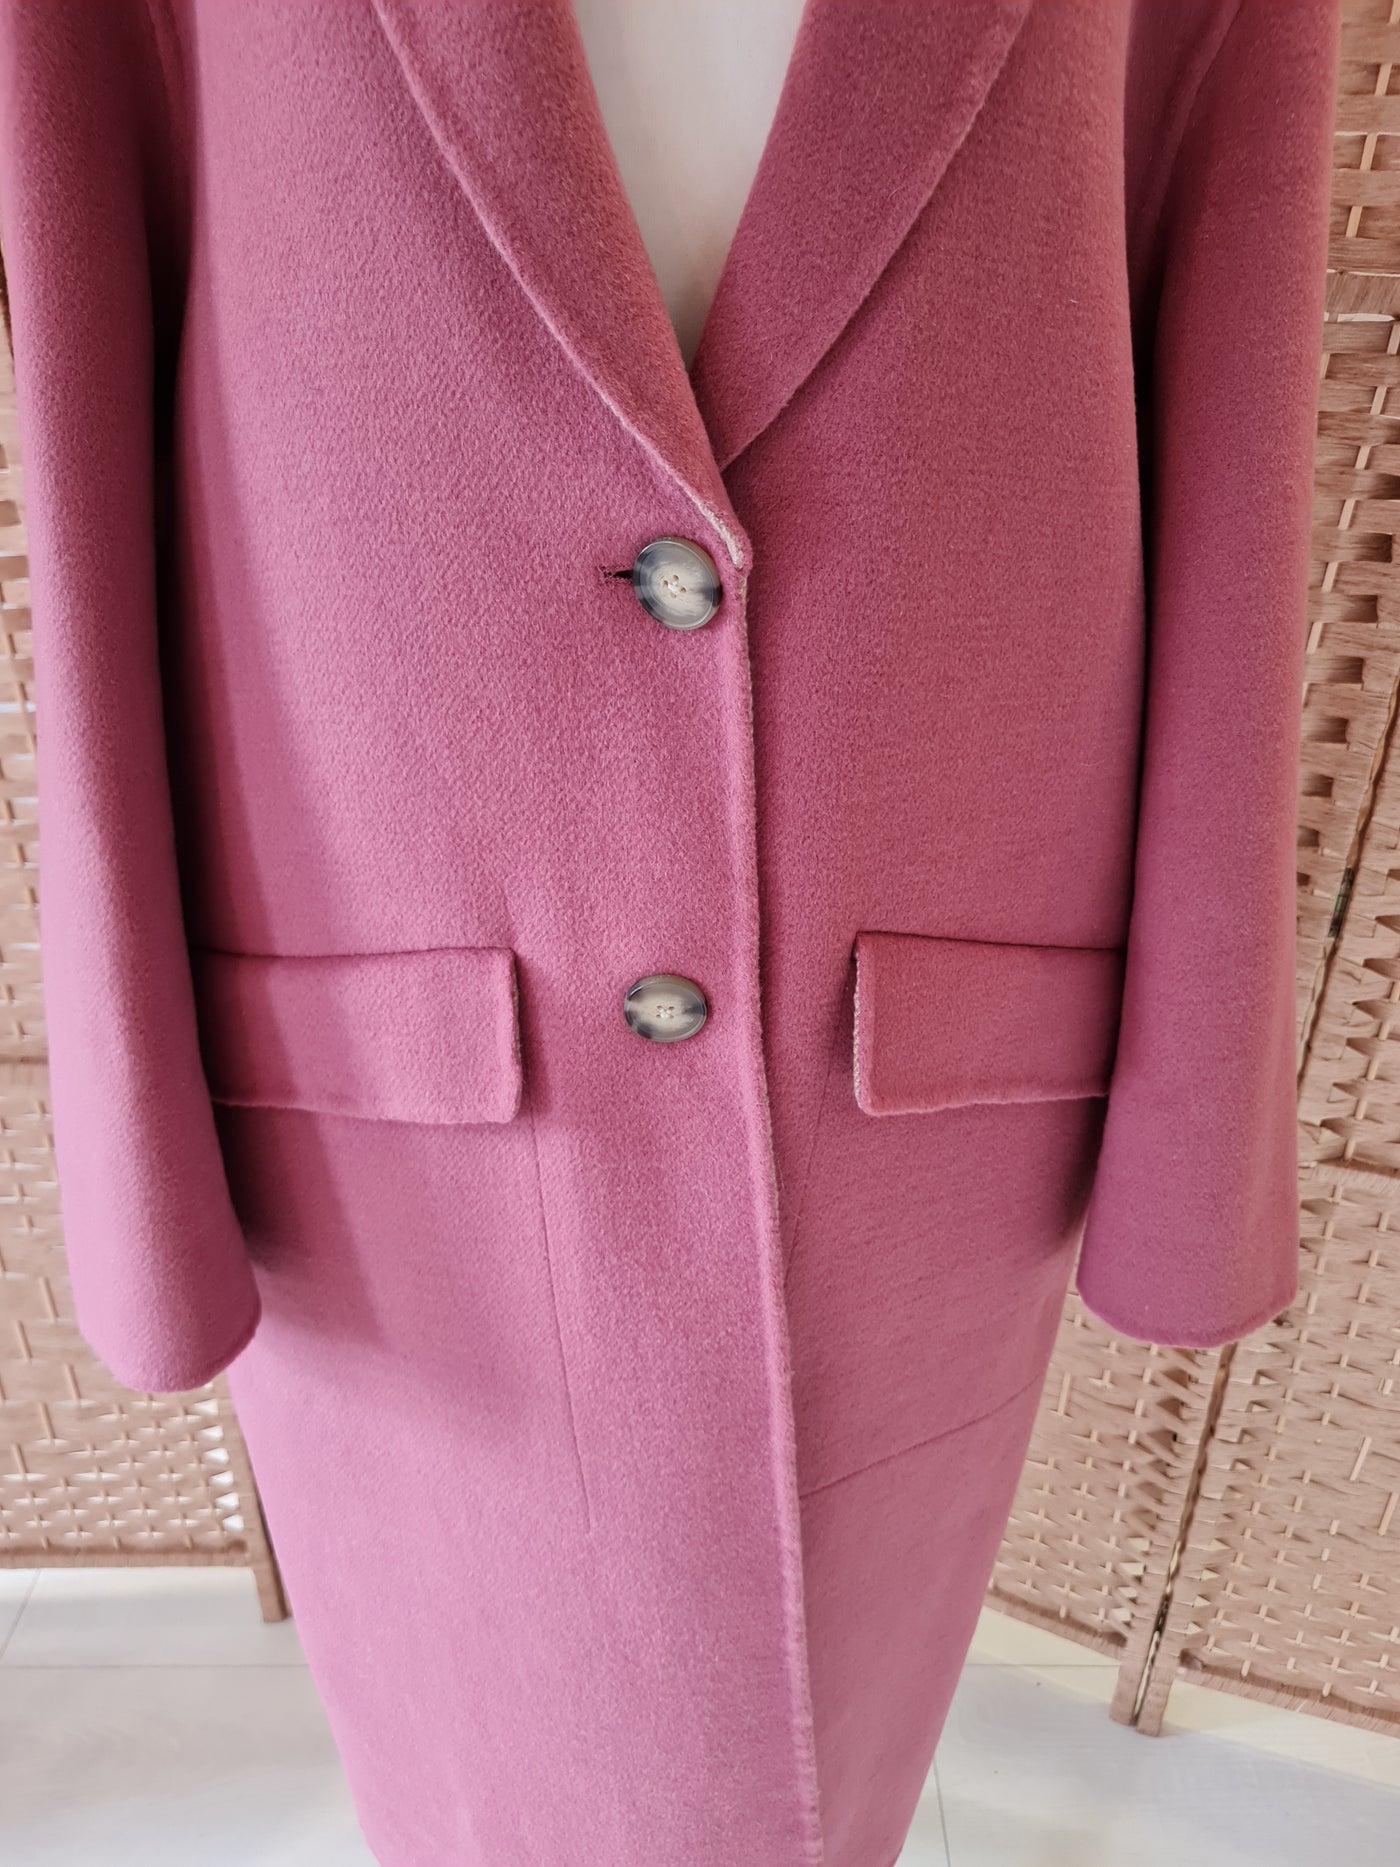 M&S Autograph Pink Coat Size 14 NWT RRP £119